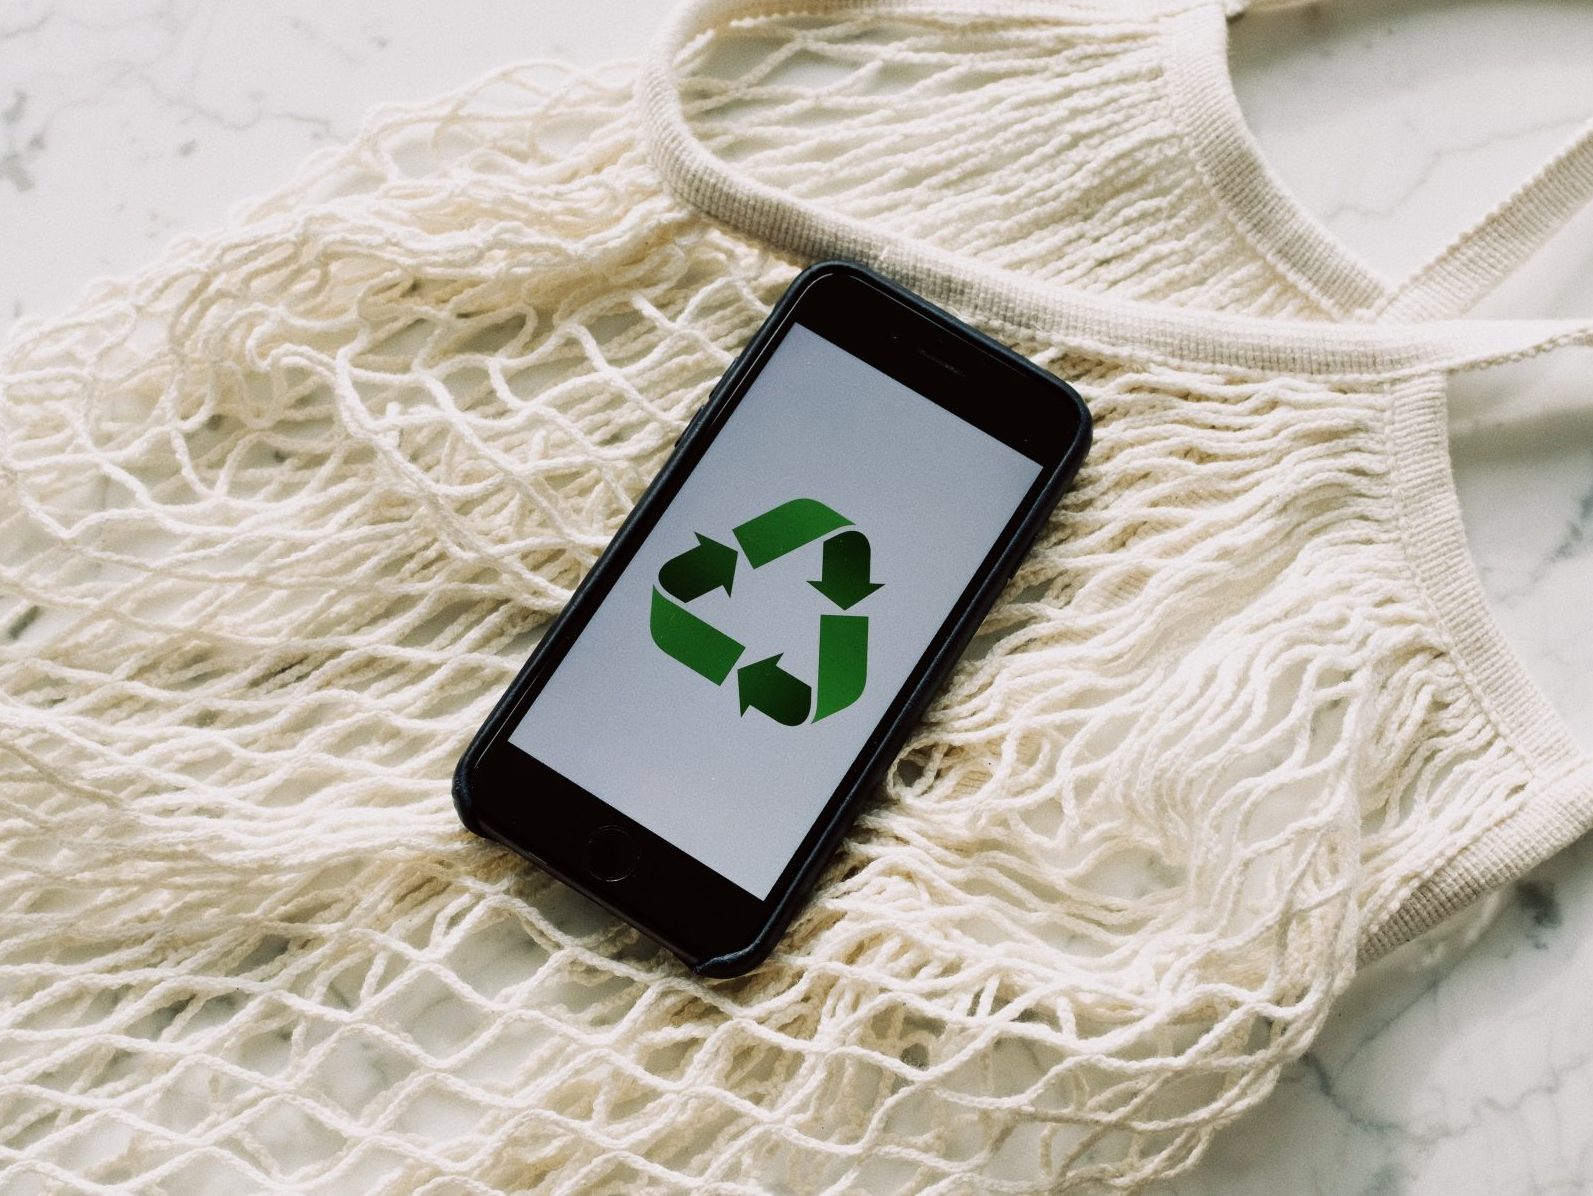 iPhone met recycle-logo. Foto: ready made/Pexels